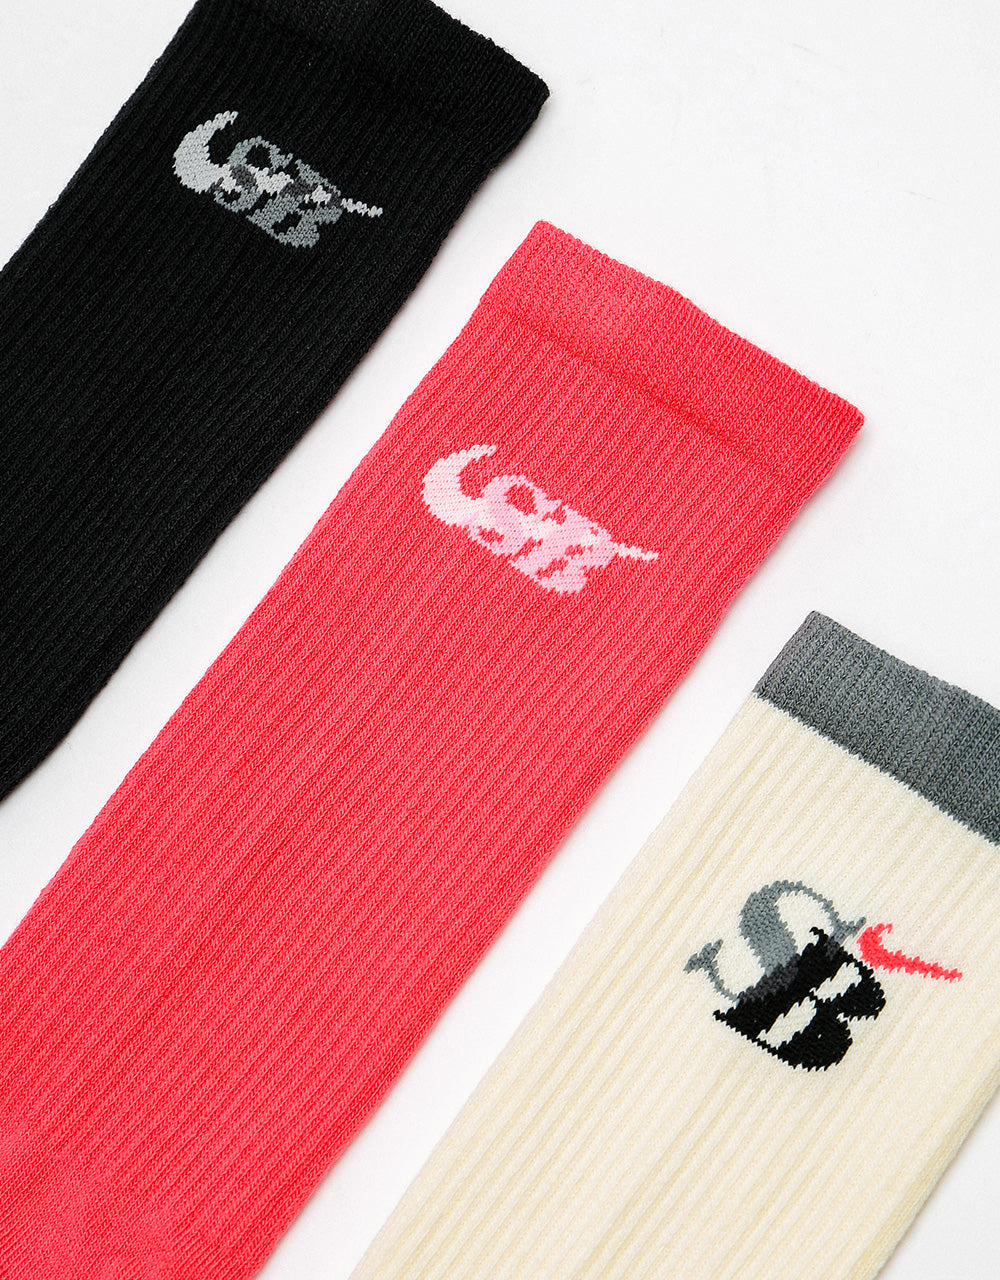 Nike SB Everyday Plus Lightweight Crew Socks - Multi-Color